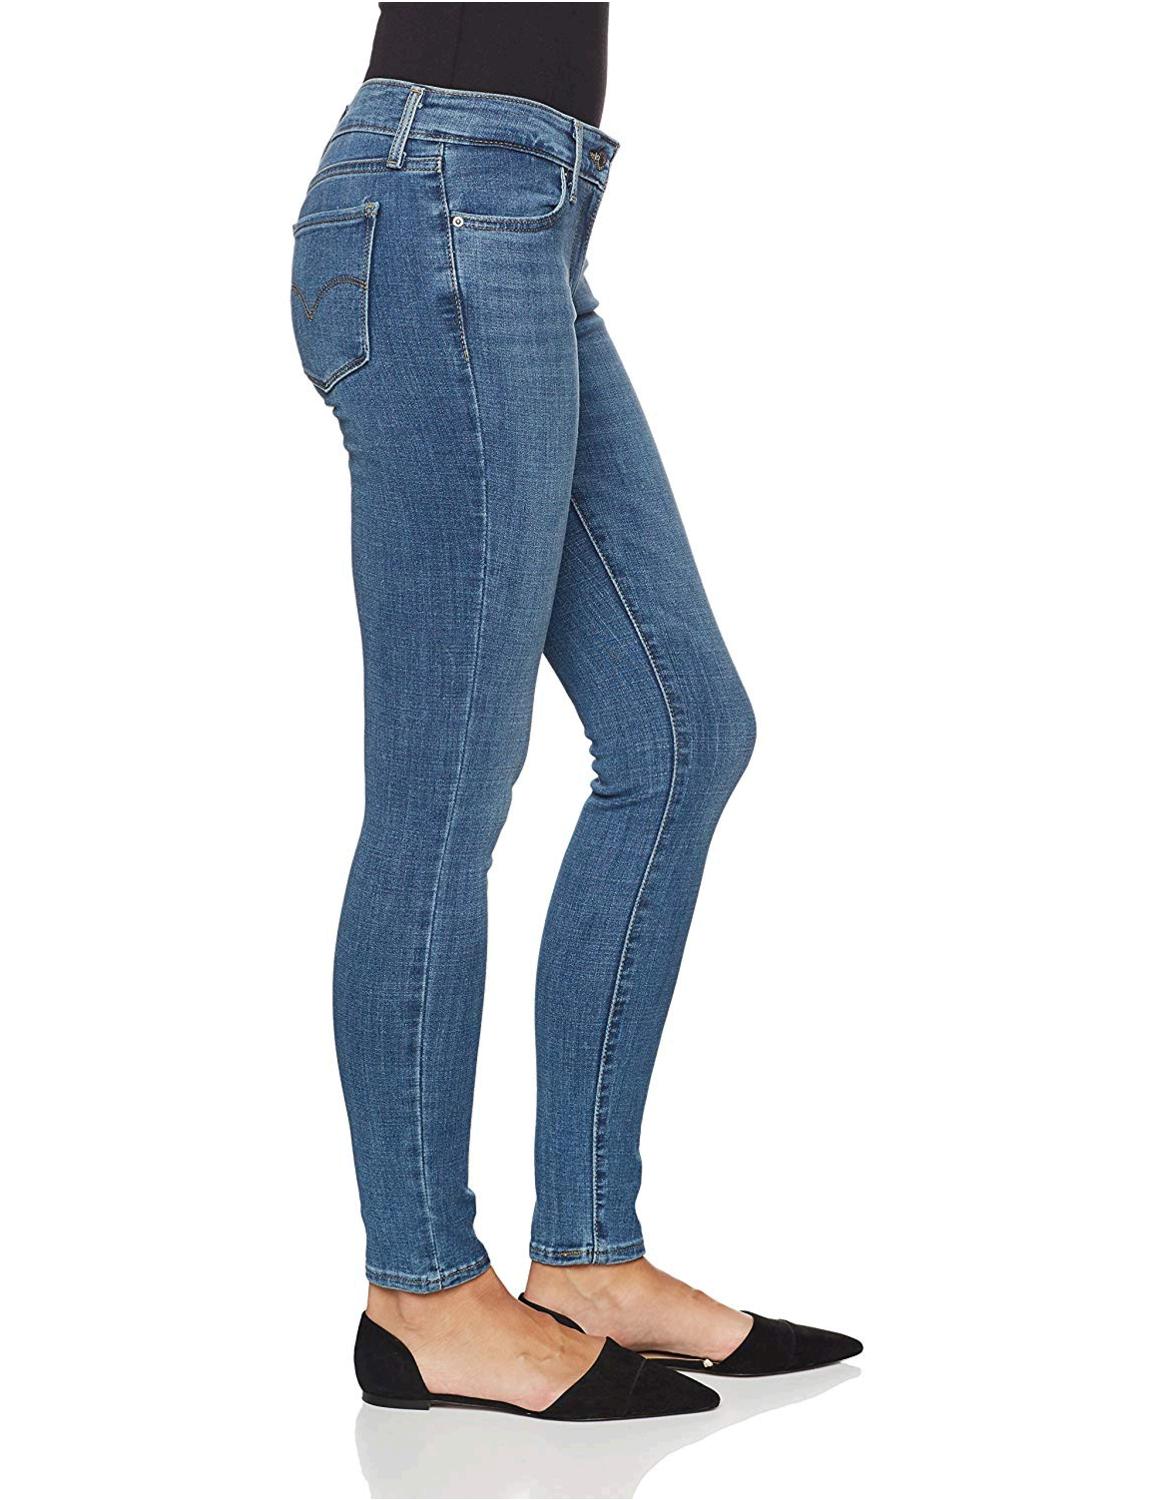 Levi's Women's 711 Skinny Jeans, Indigo Rays, 30 (US 10) R, Indigo Rays ...